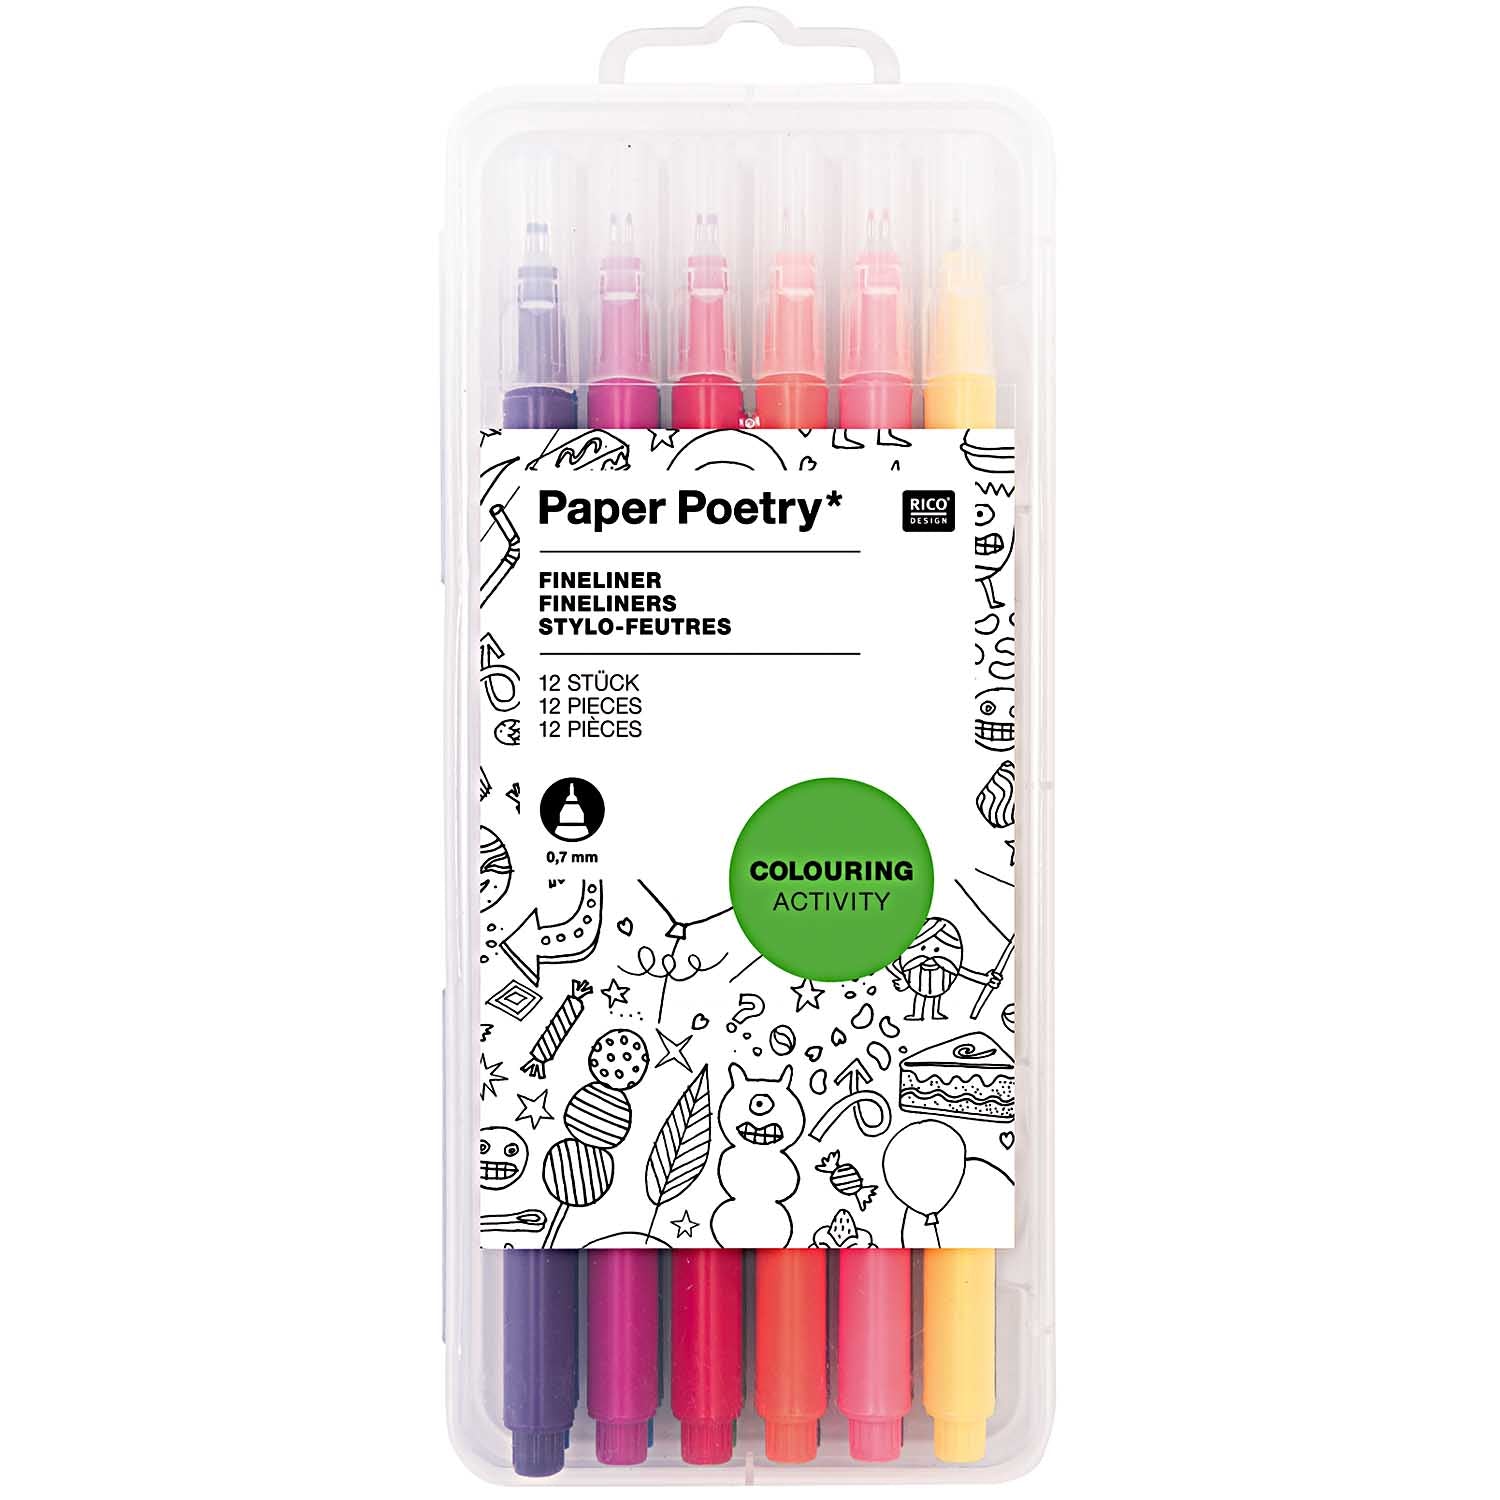 Paper Poetry Pens - Fineliner Set of 12